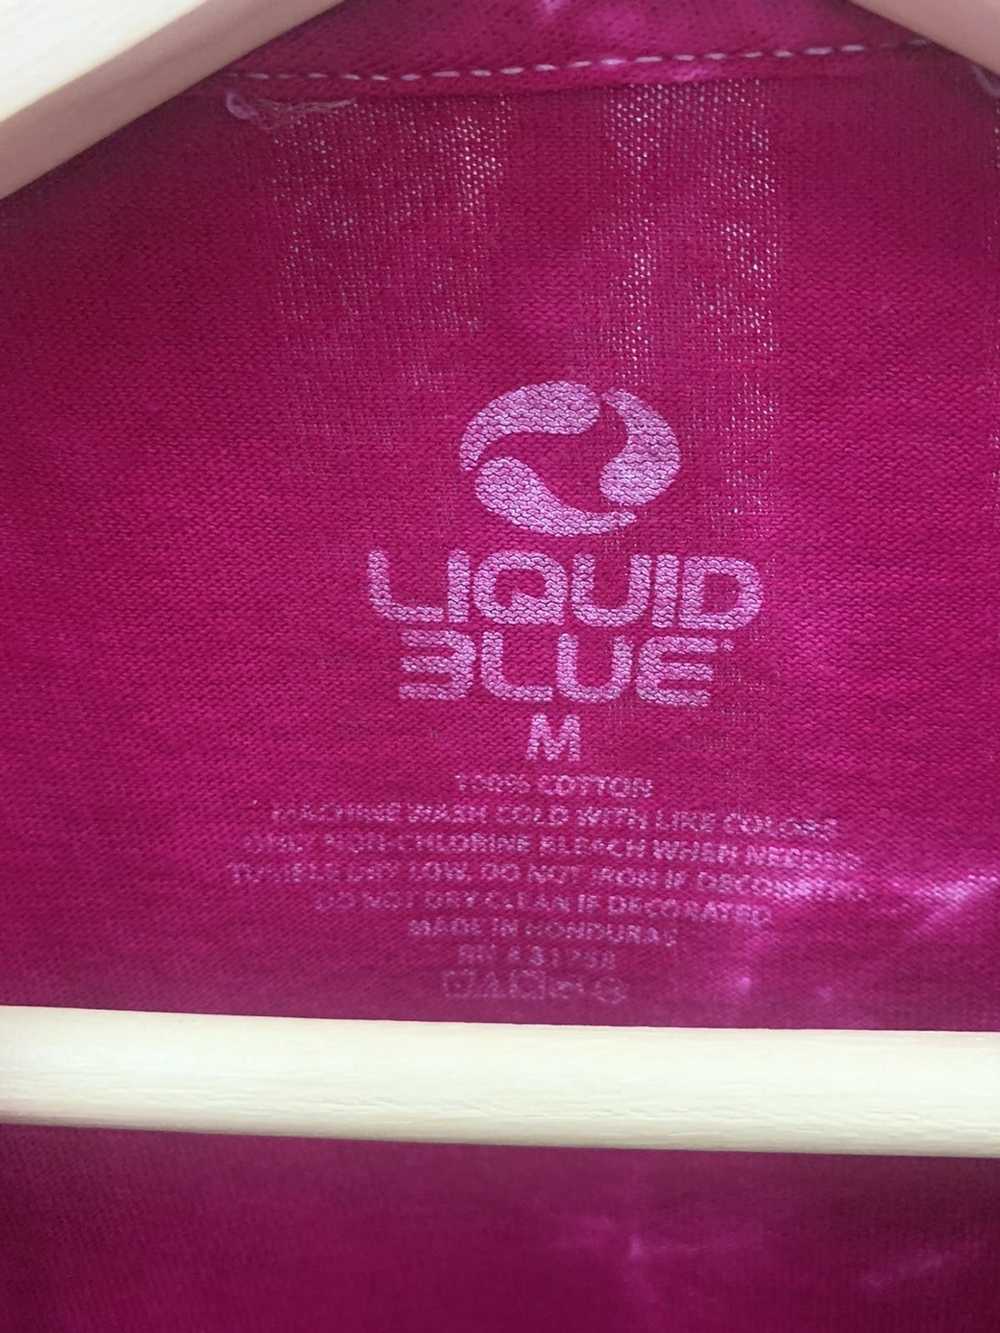 Liquid Blue jimi hendrix experience x liquid blue - image 3